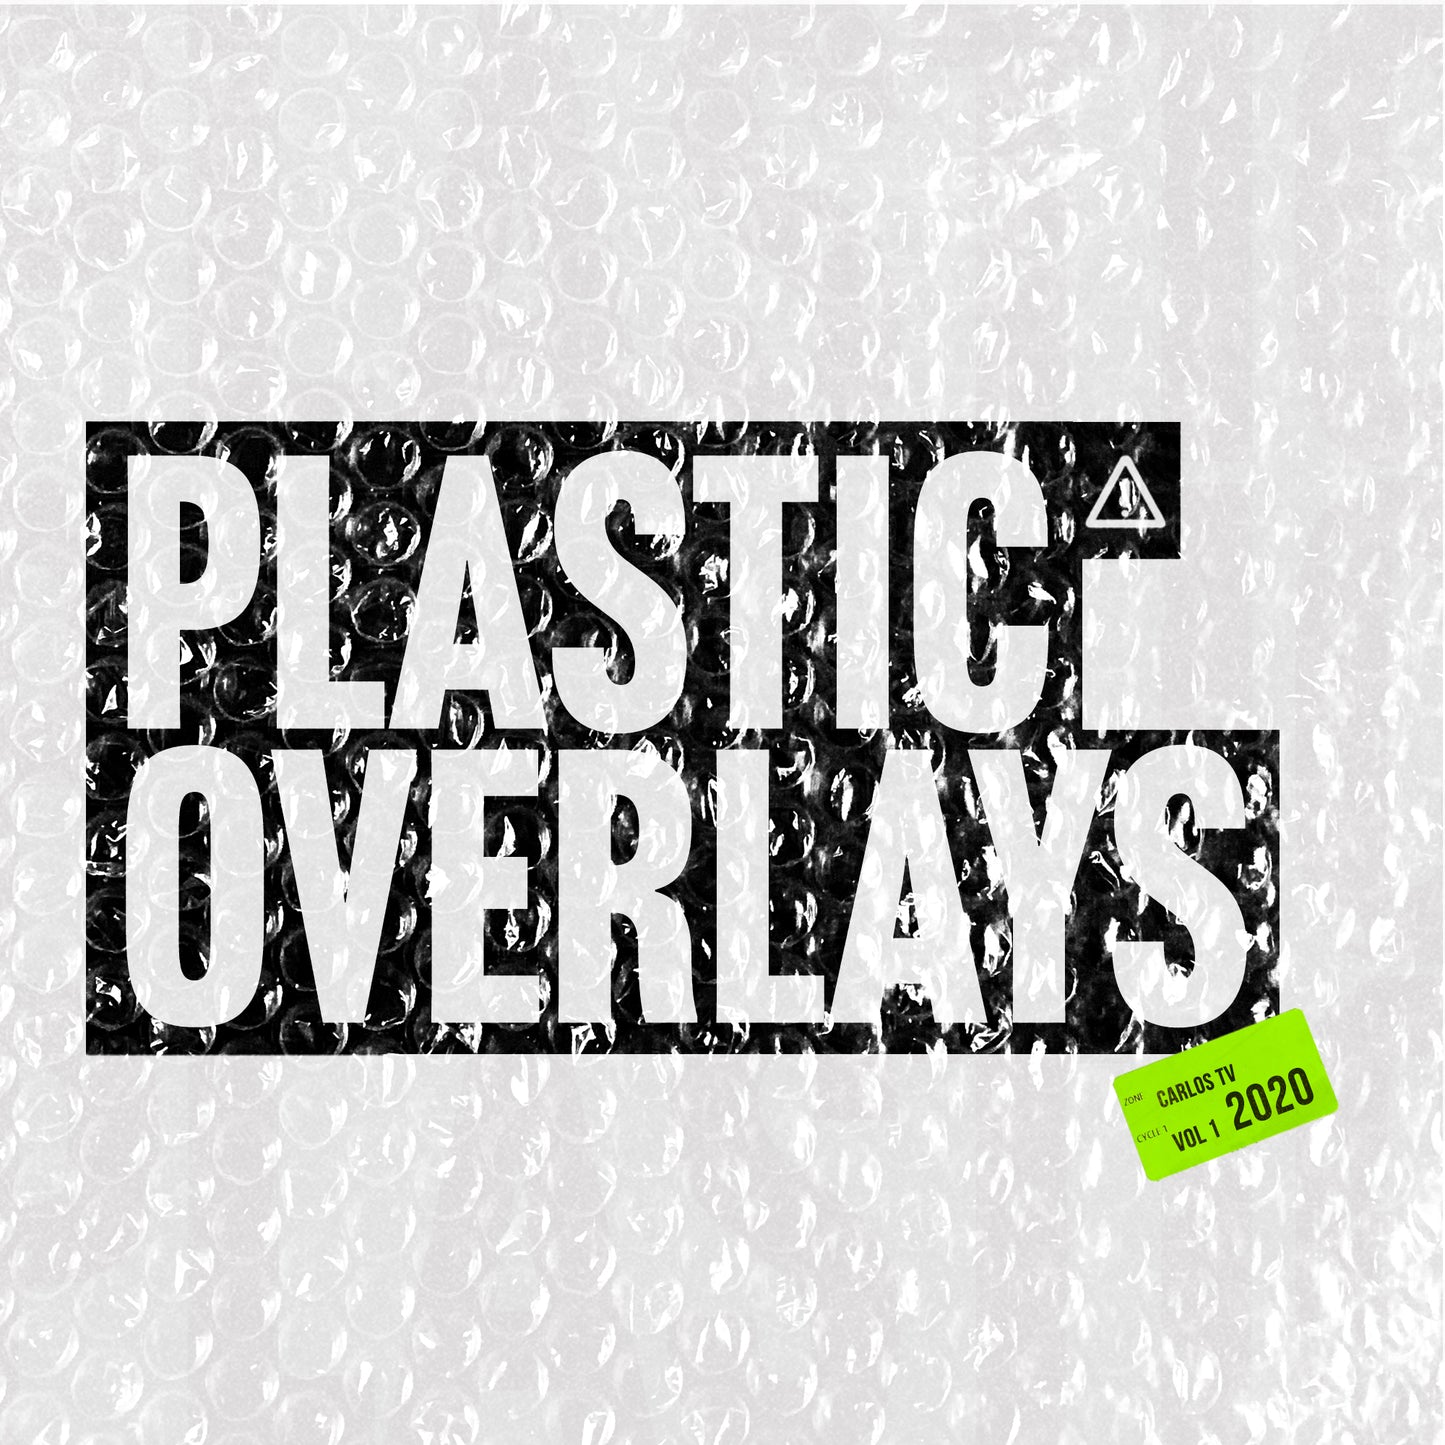 Plastic Overlays Vol. 1